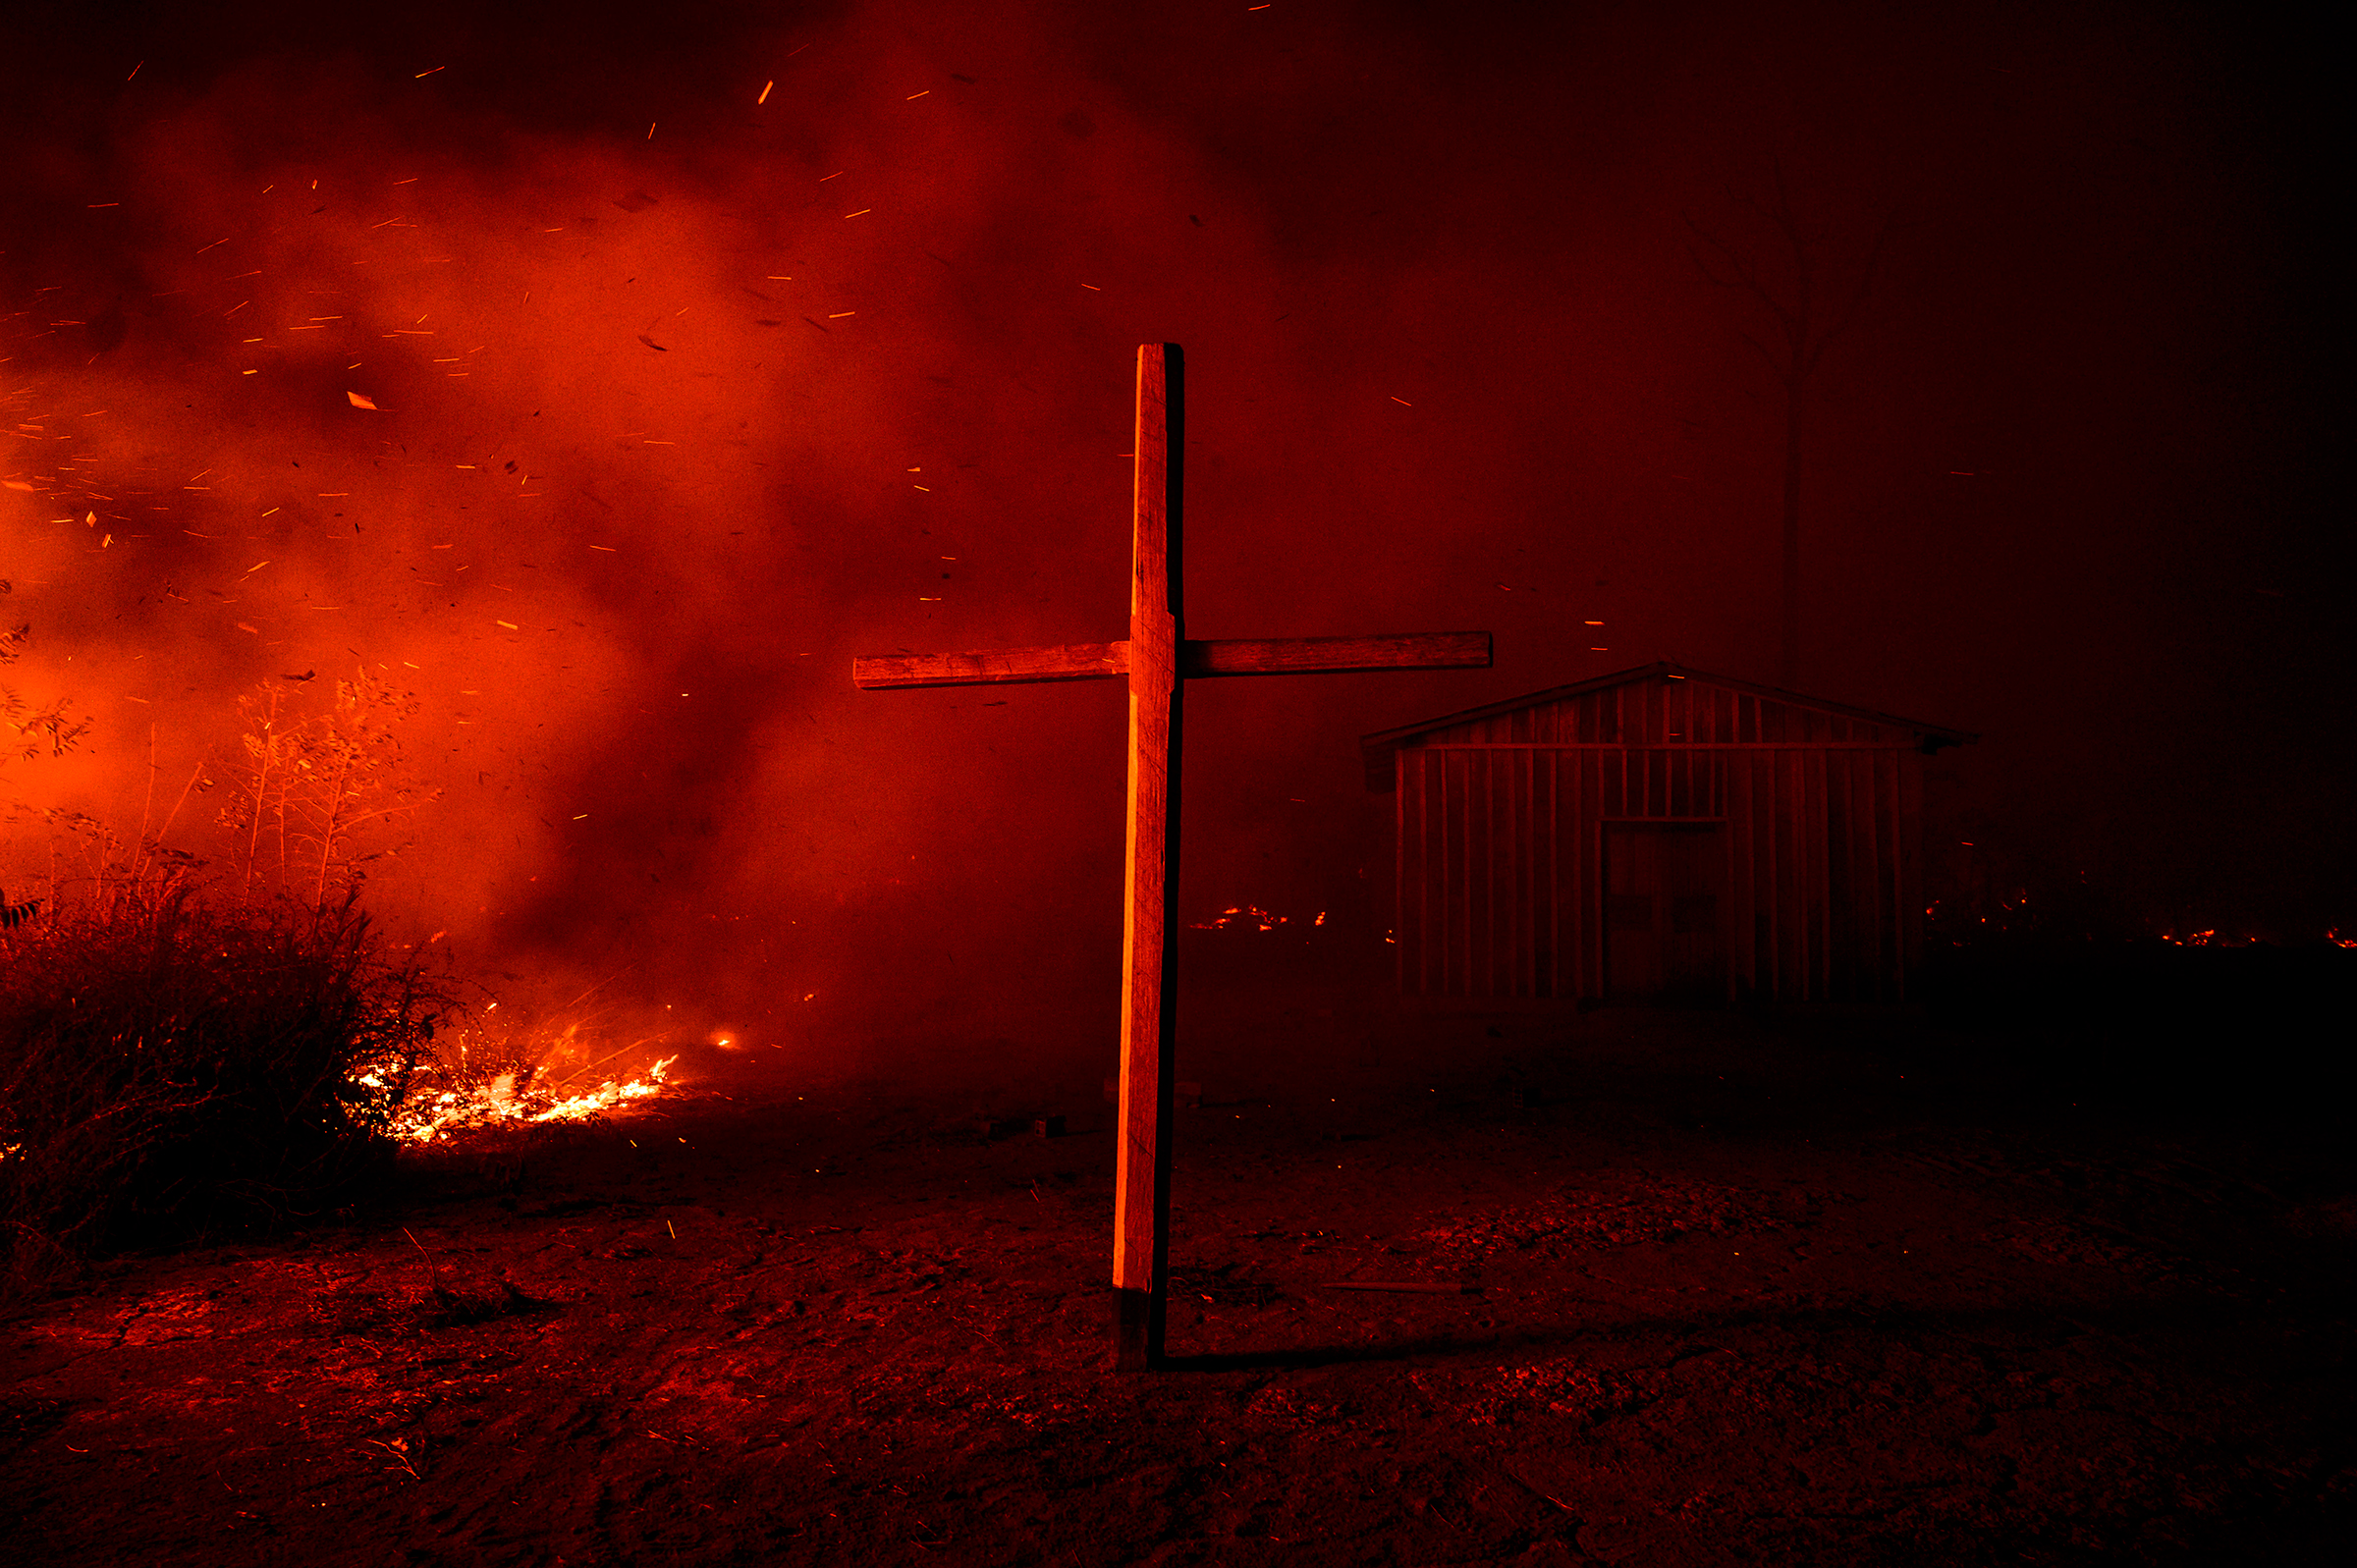 A church is enveloped in smoke from nearby flames in the region of Vila Nova Samuel on Aug. 27. (Sebastián Liste—NOOR for TIME)